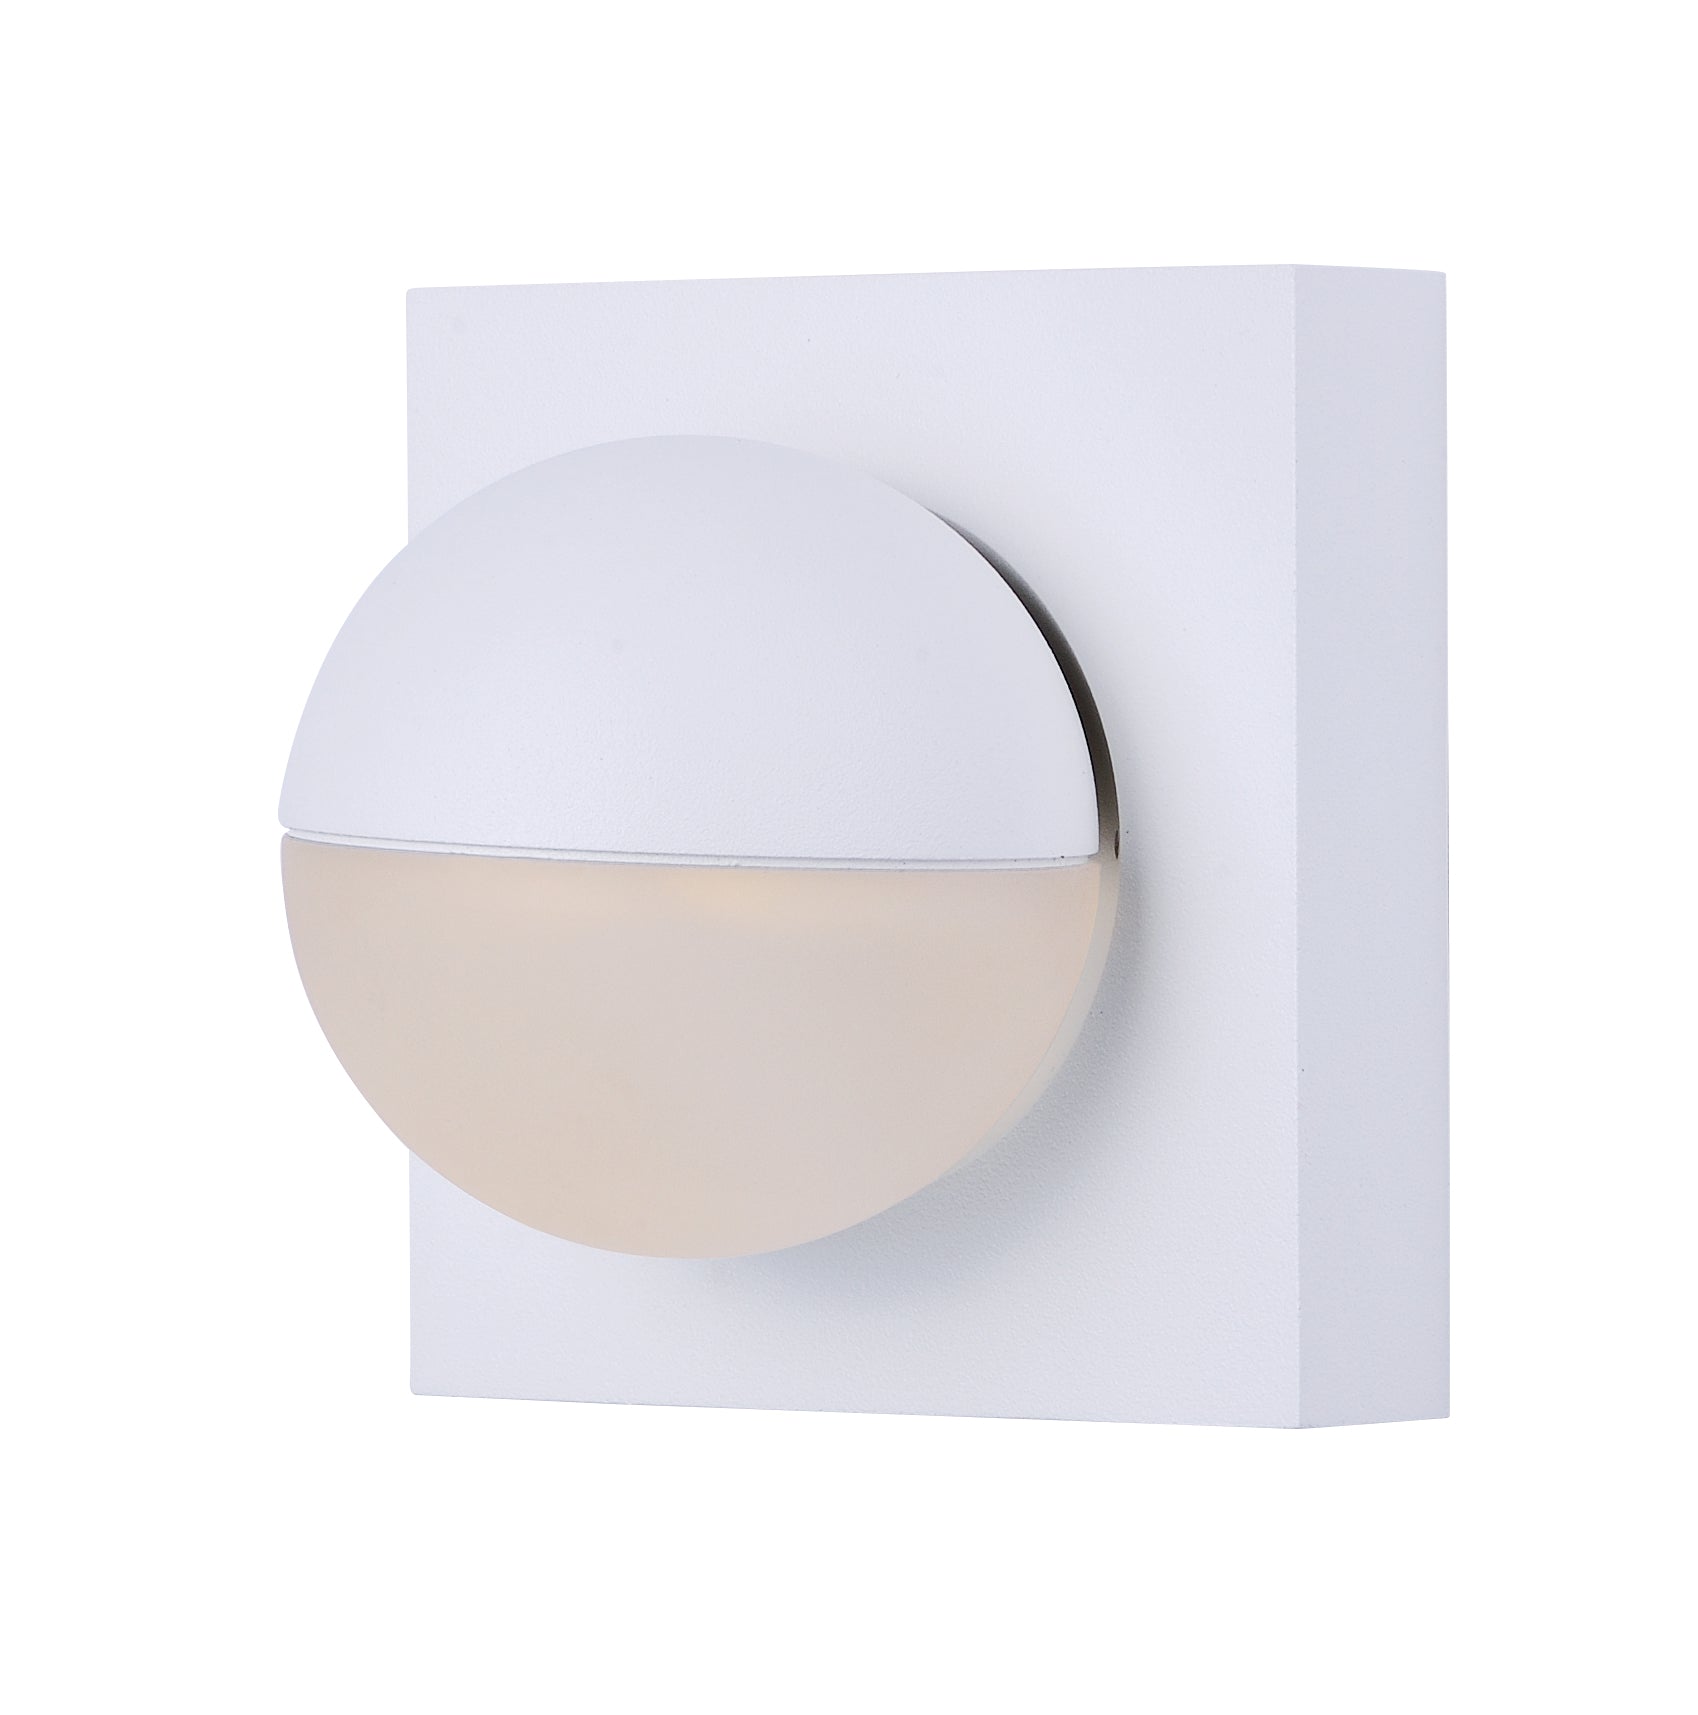 Alumilux Majik-Wall Sconce Wall Light Fixtures ET2 x4.25x4.25 White 